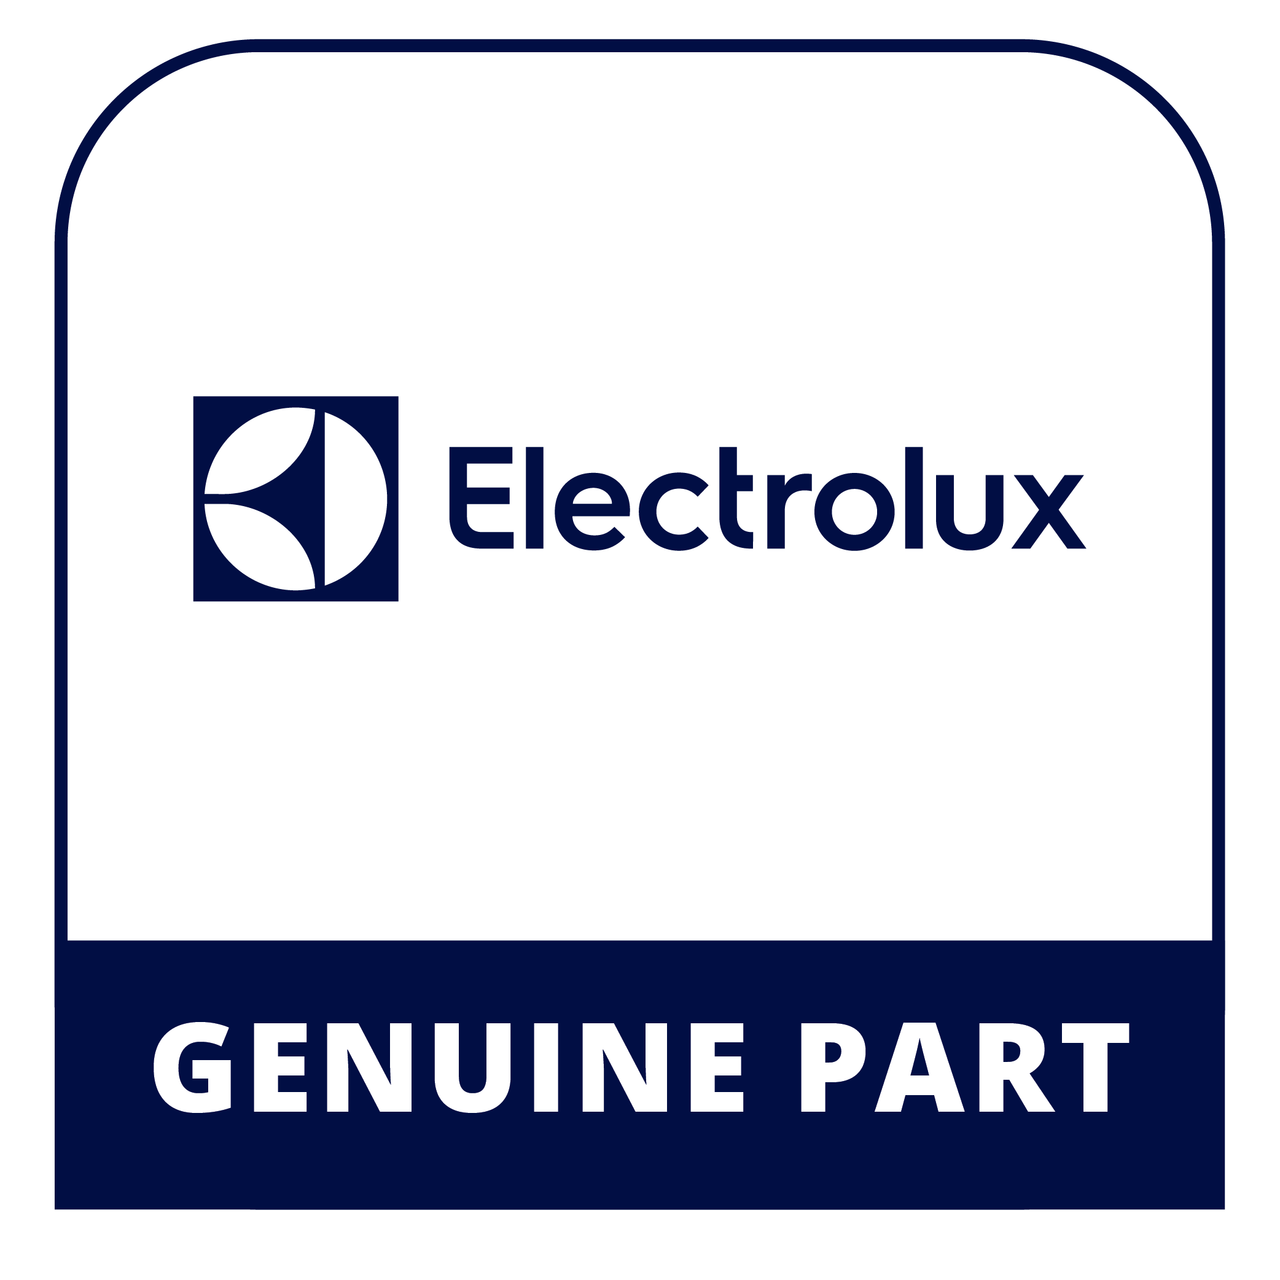 Frigidaire - Electrolux 154543401 - Board - Genuine Electrolux Part